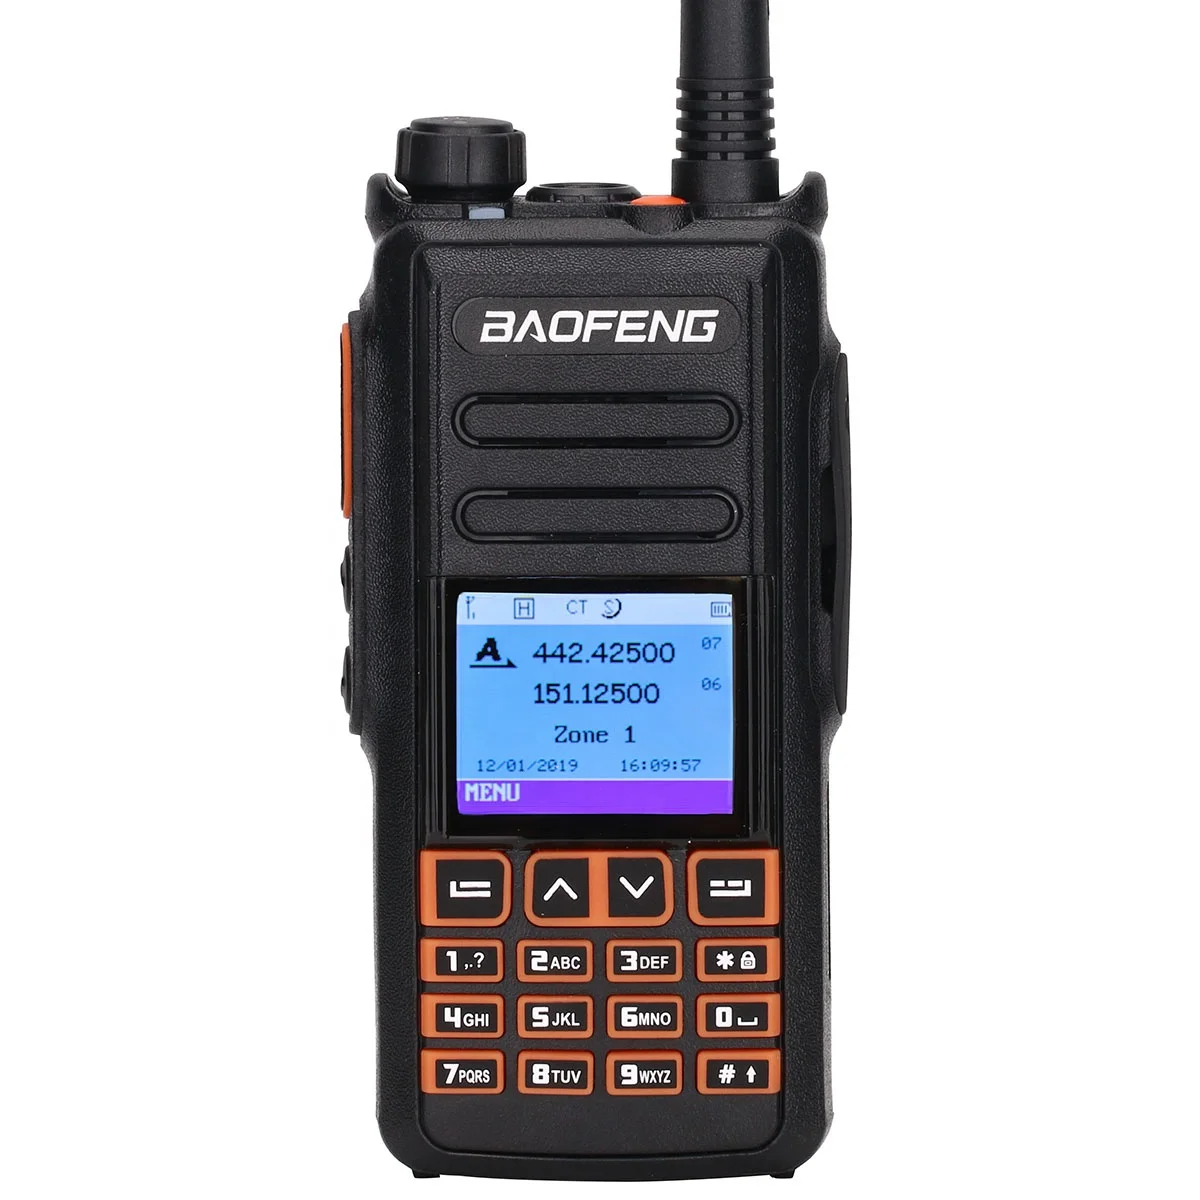 

Baofeng DM-X GPS Record Tier 1&2 tier II Dual Time Slot DMR Digital/Analog Walkie Talkie Portable Radio Upgrade of DM-1702